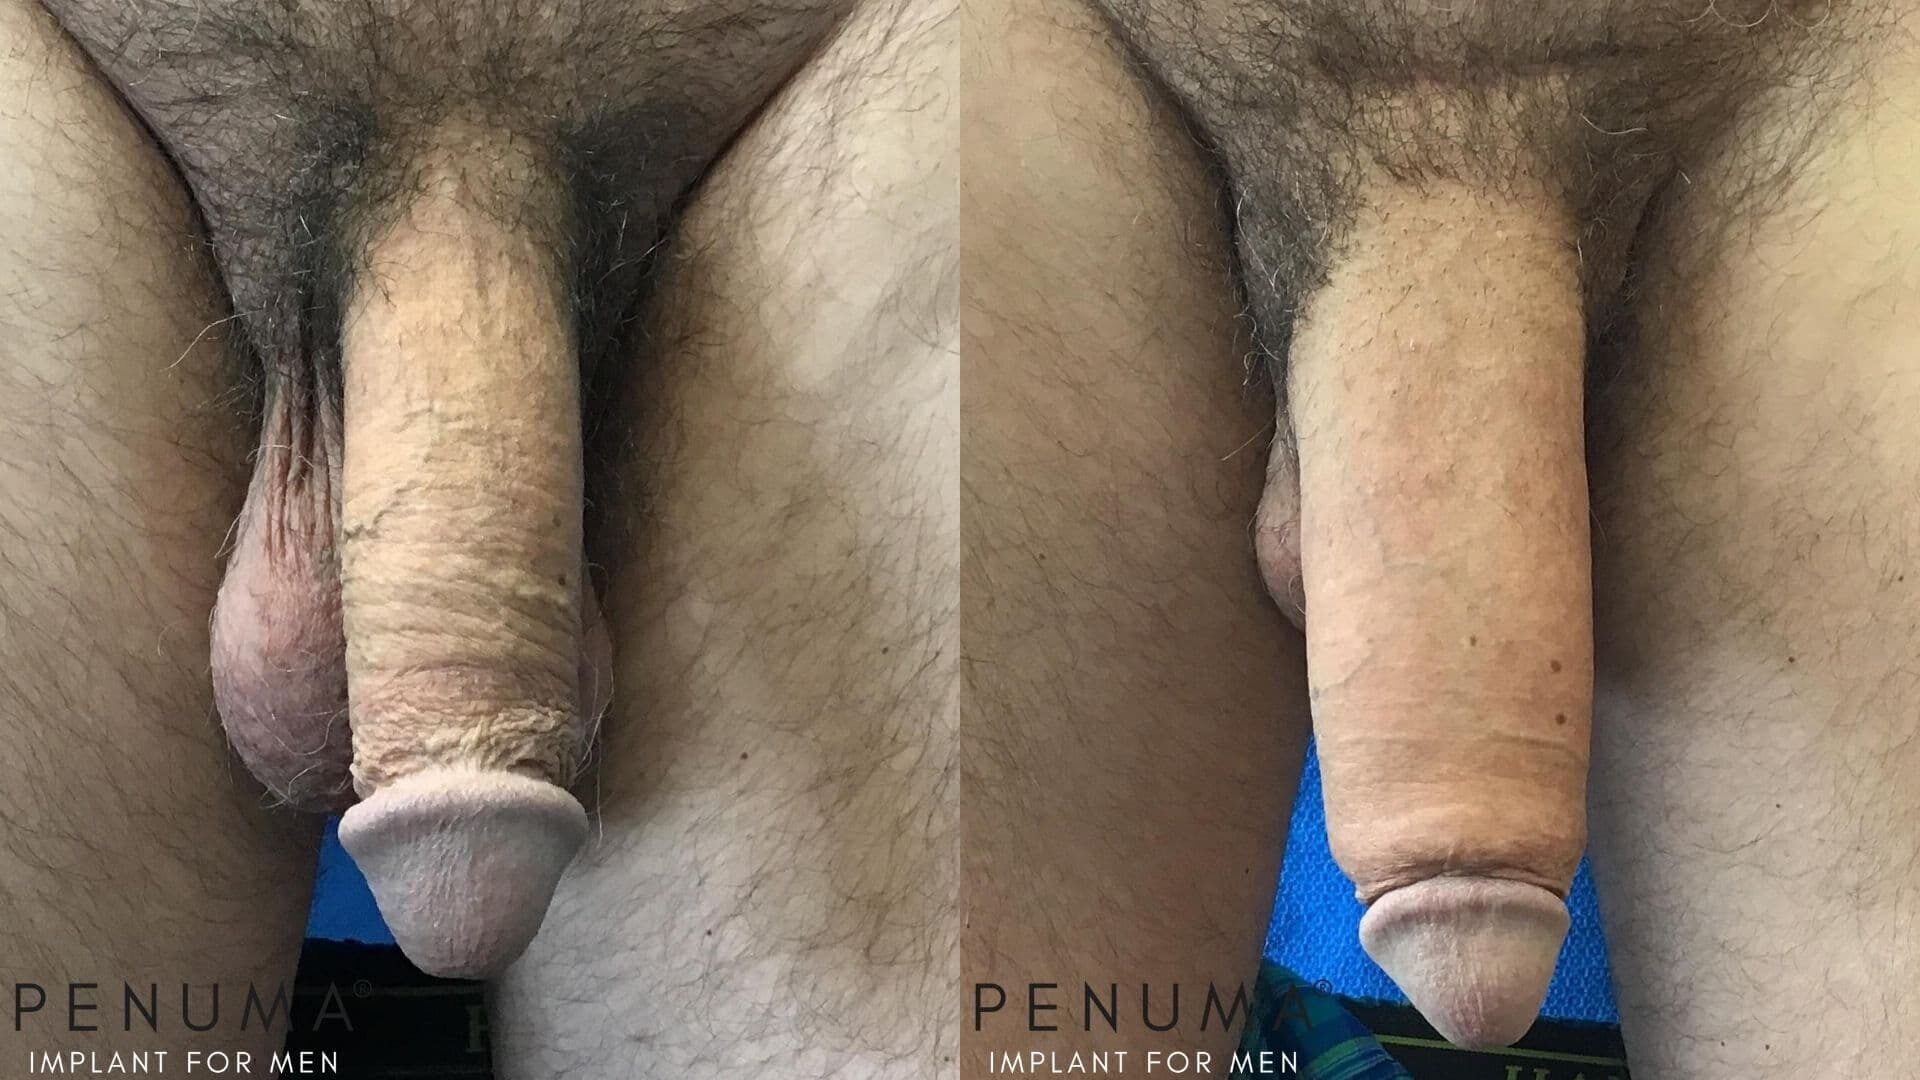 Penuma penile implant before and after